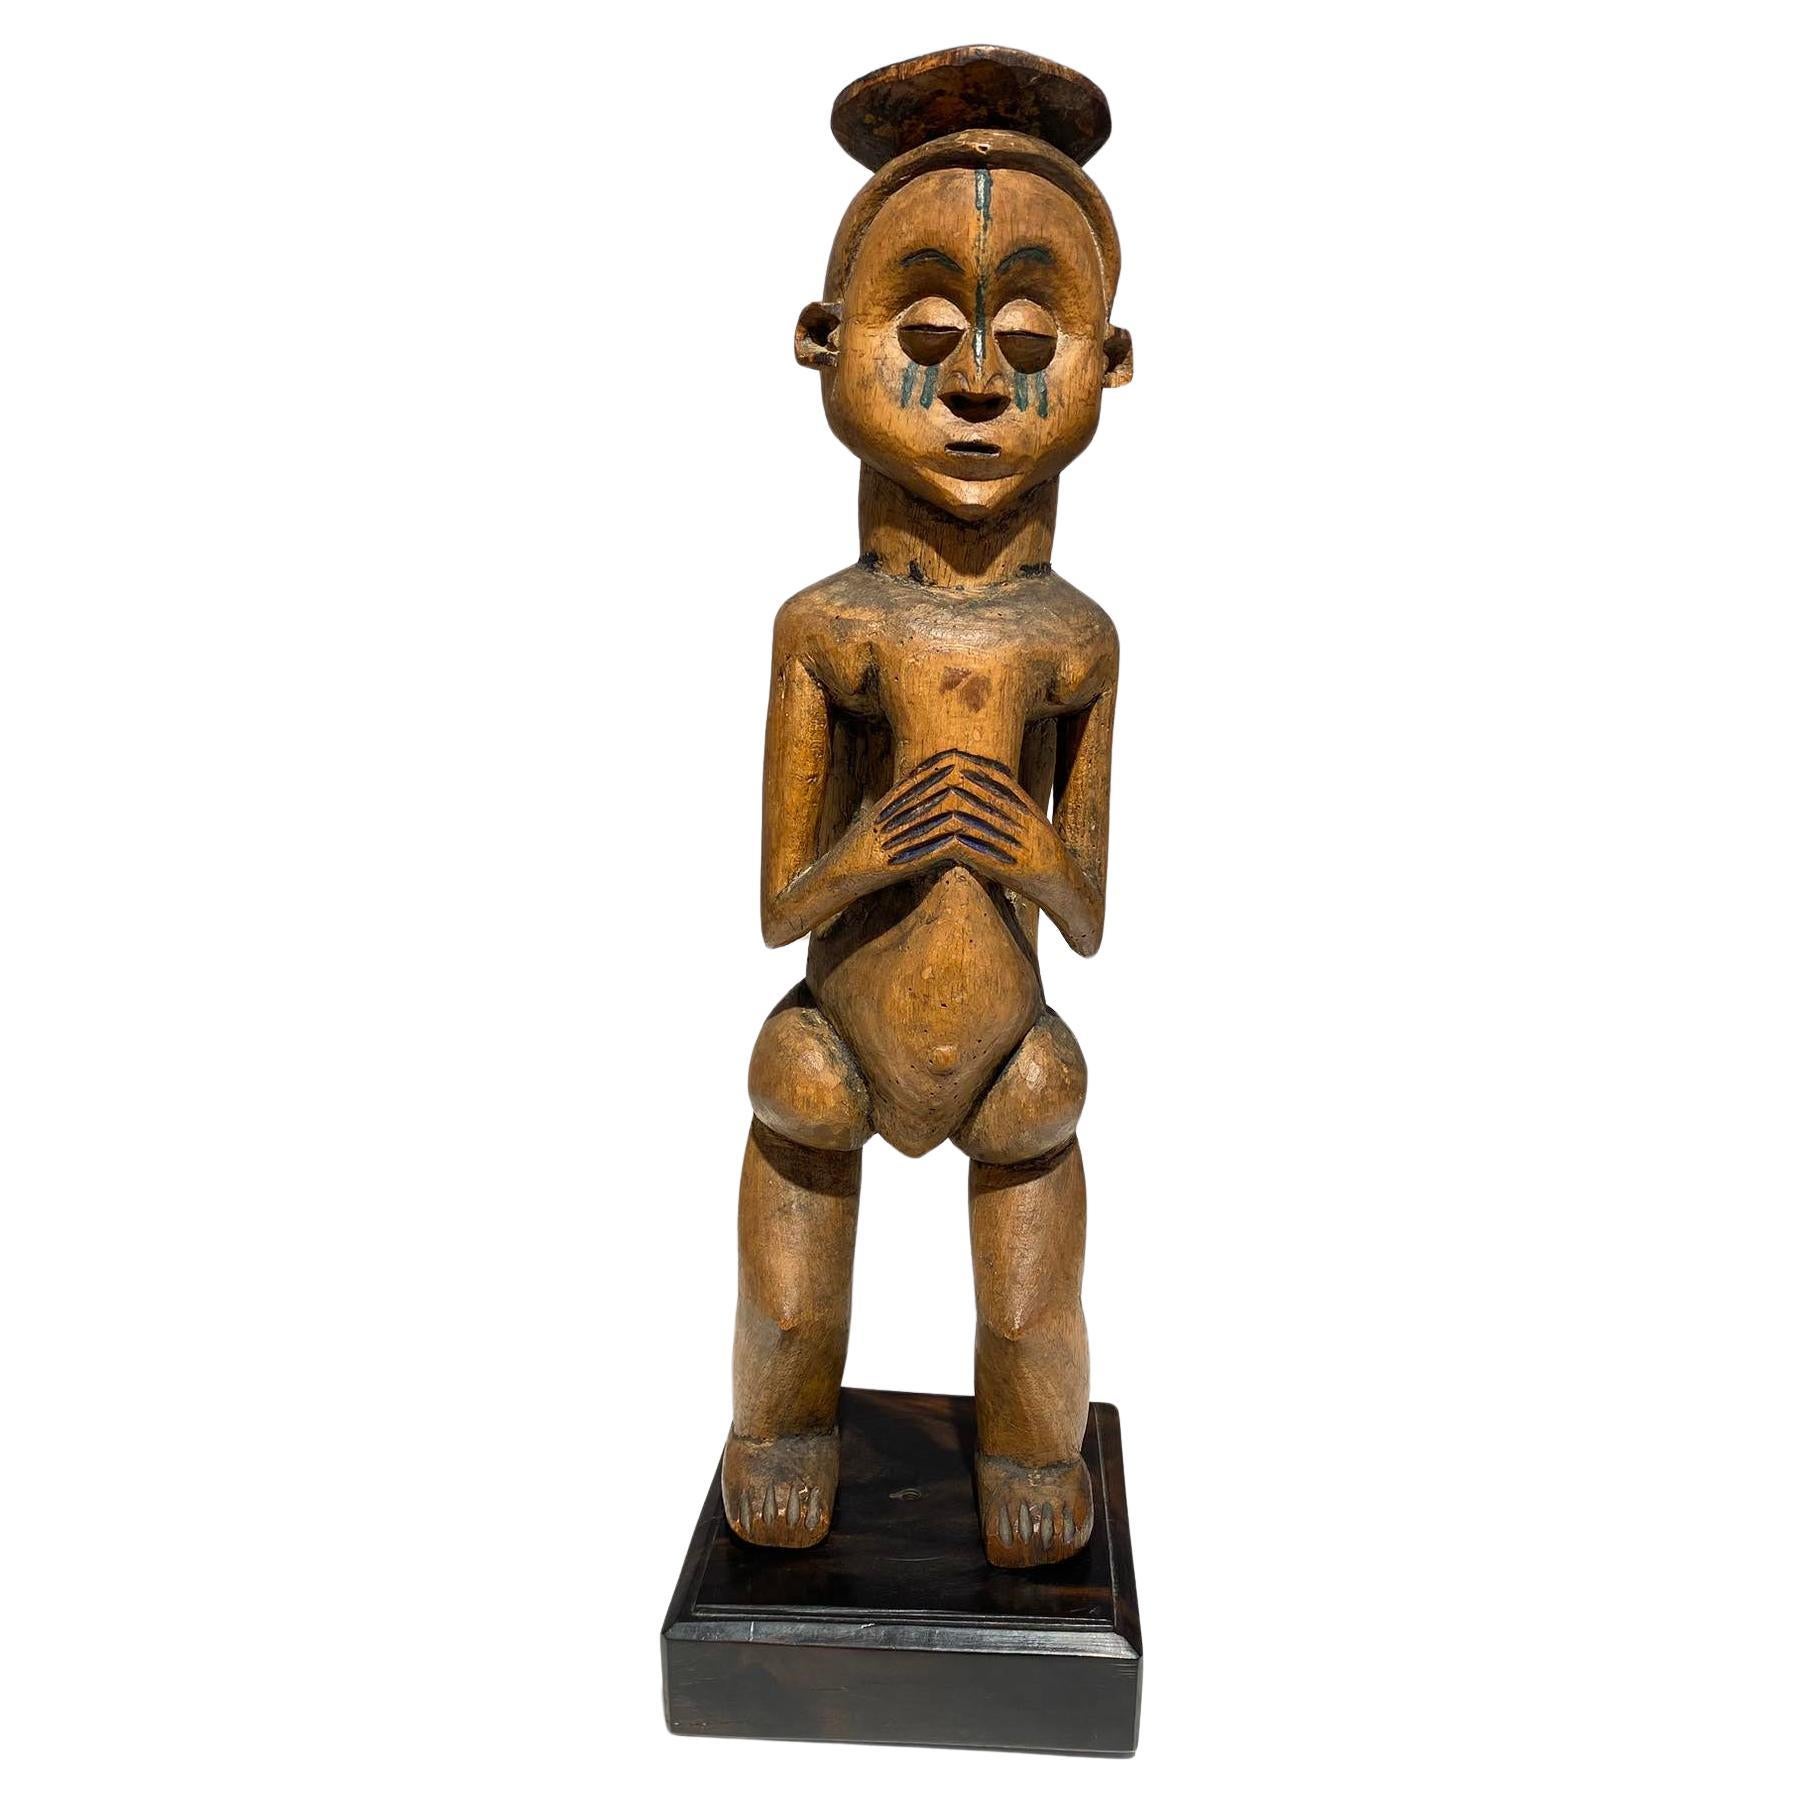 Superb museum quality Holo mvunzi wooden statue late 19th century Congo